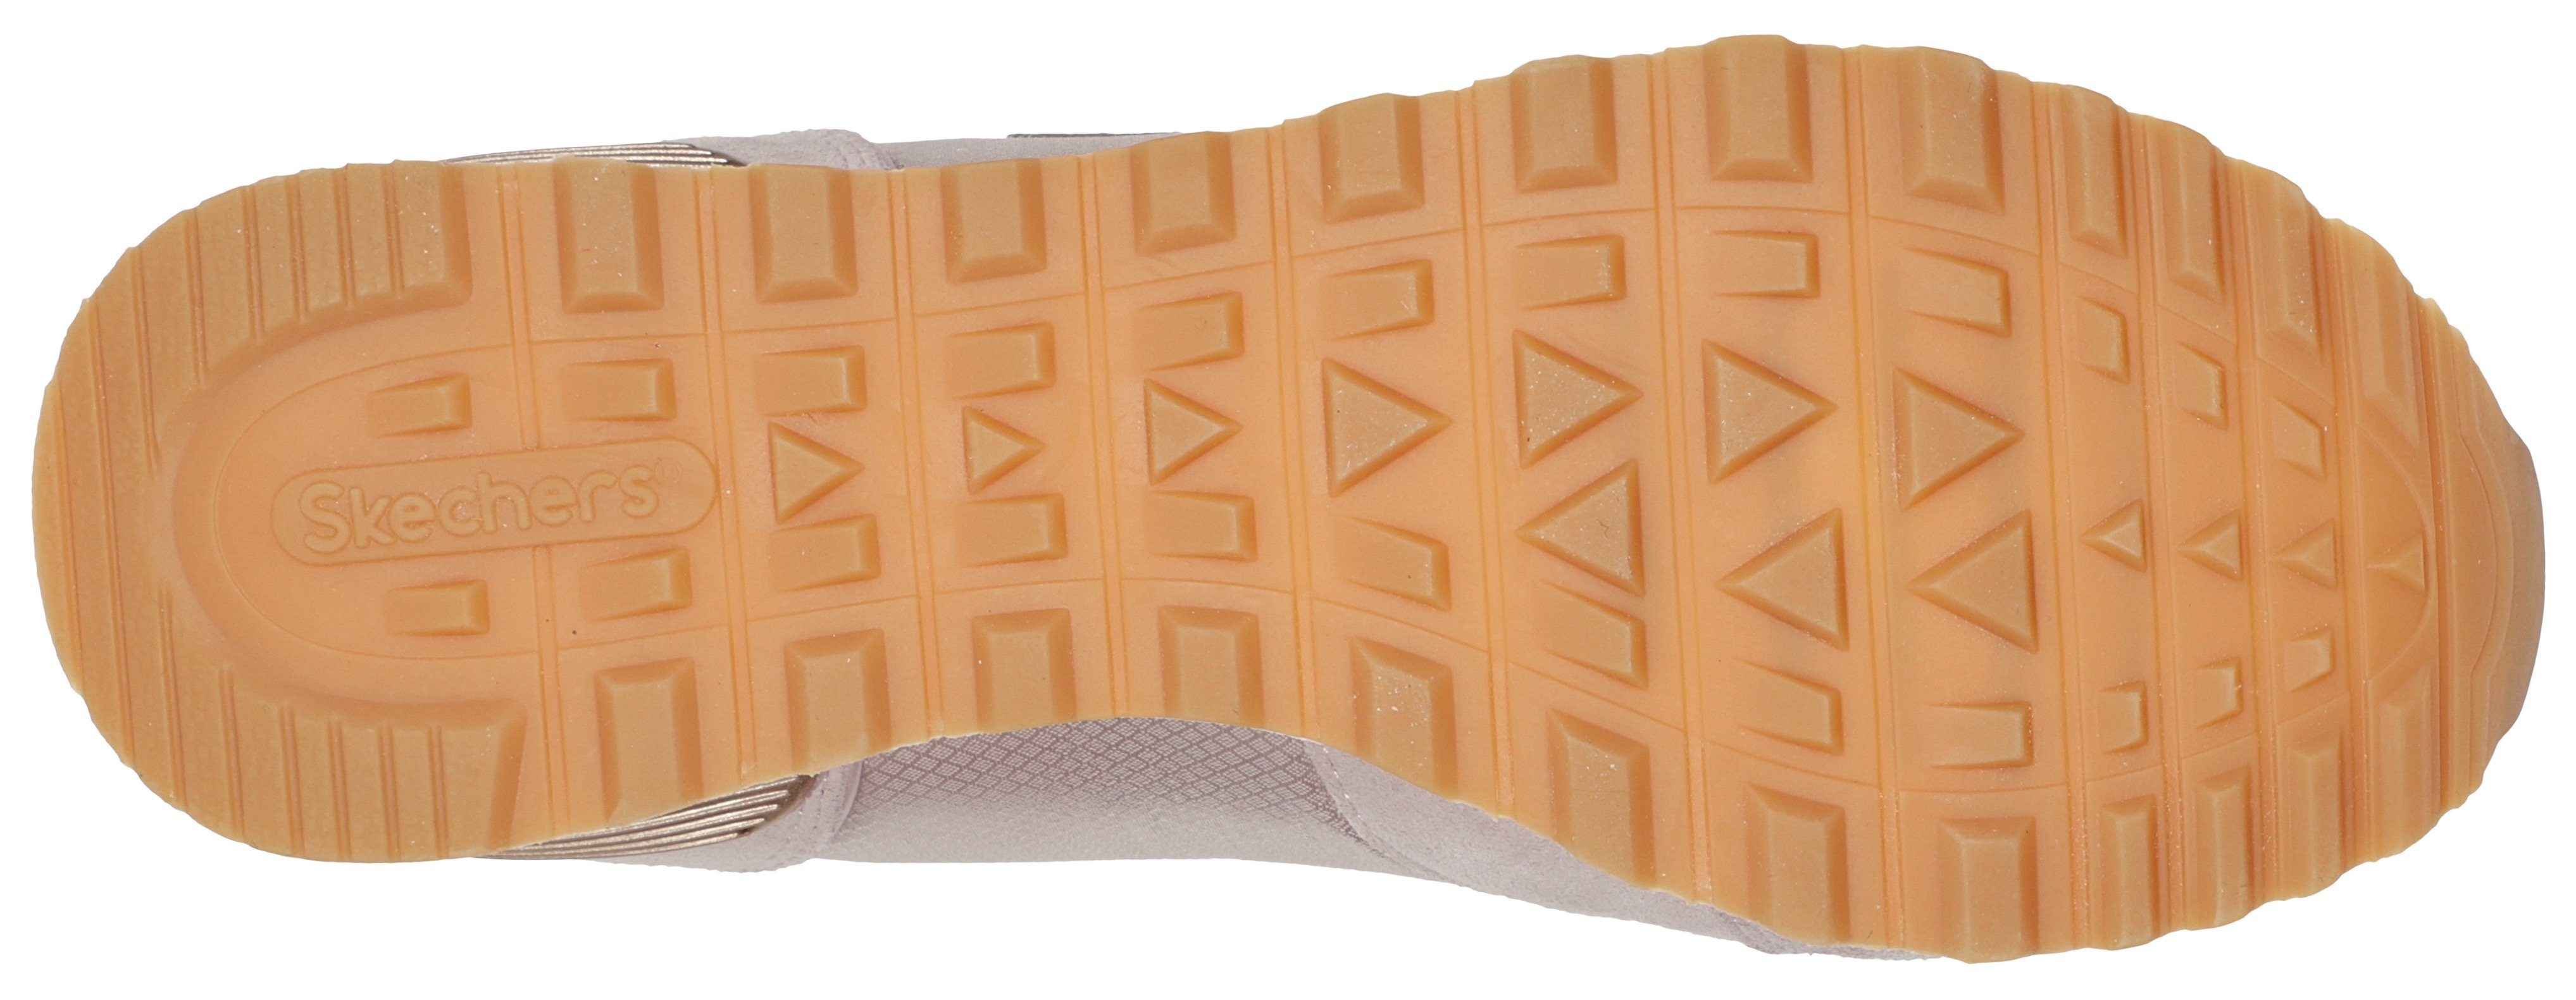 Skechers OG 85 Sneaker komfortabler rose GOLDN Ausstattung - Air-Cooled Memory GURL Foam mit